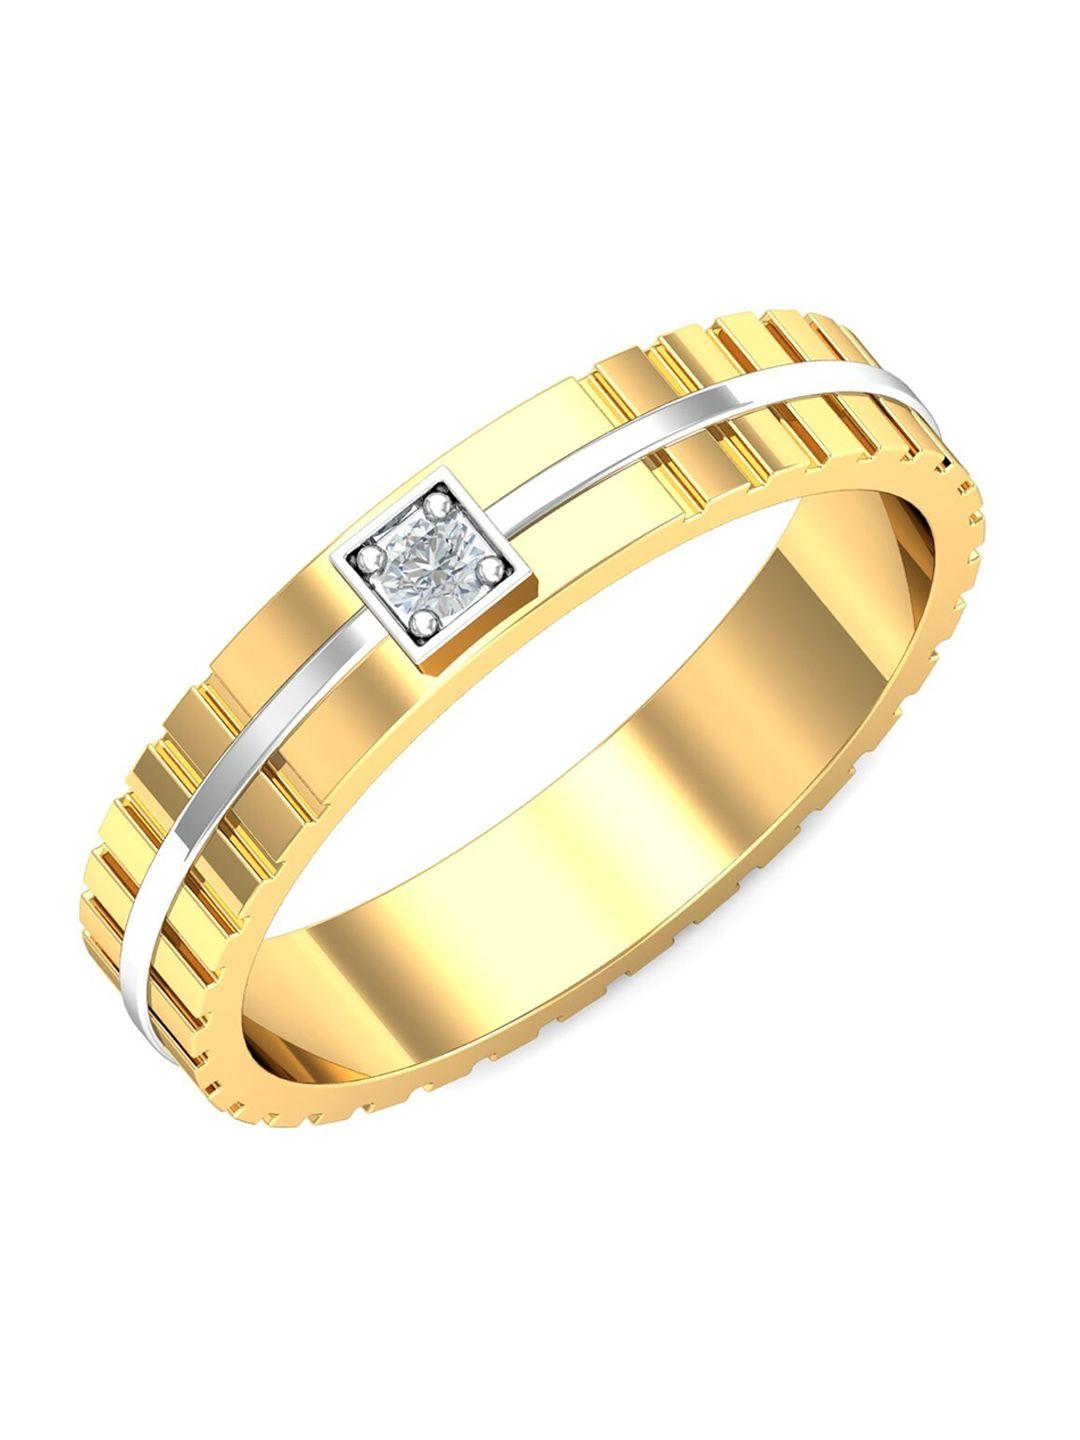 kuberbox hercules men 18kt gold diamond-studded ring - 3.68 gm